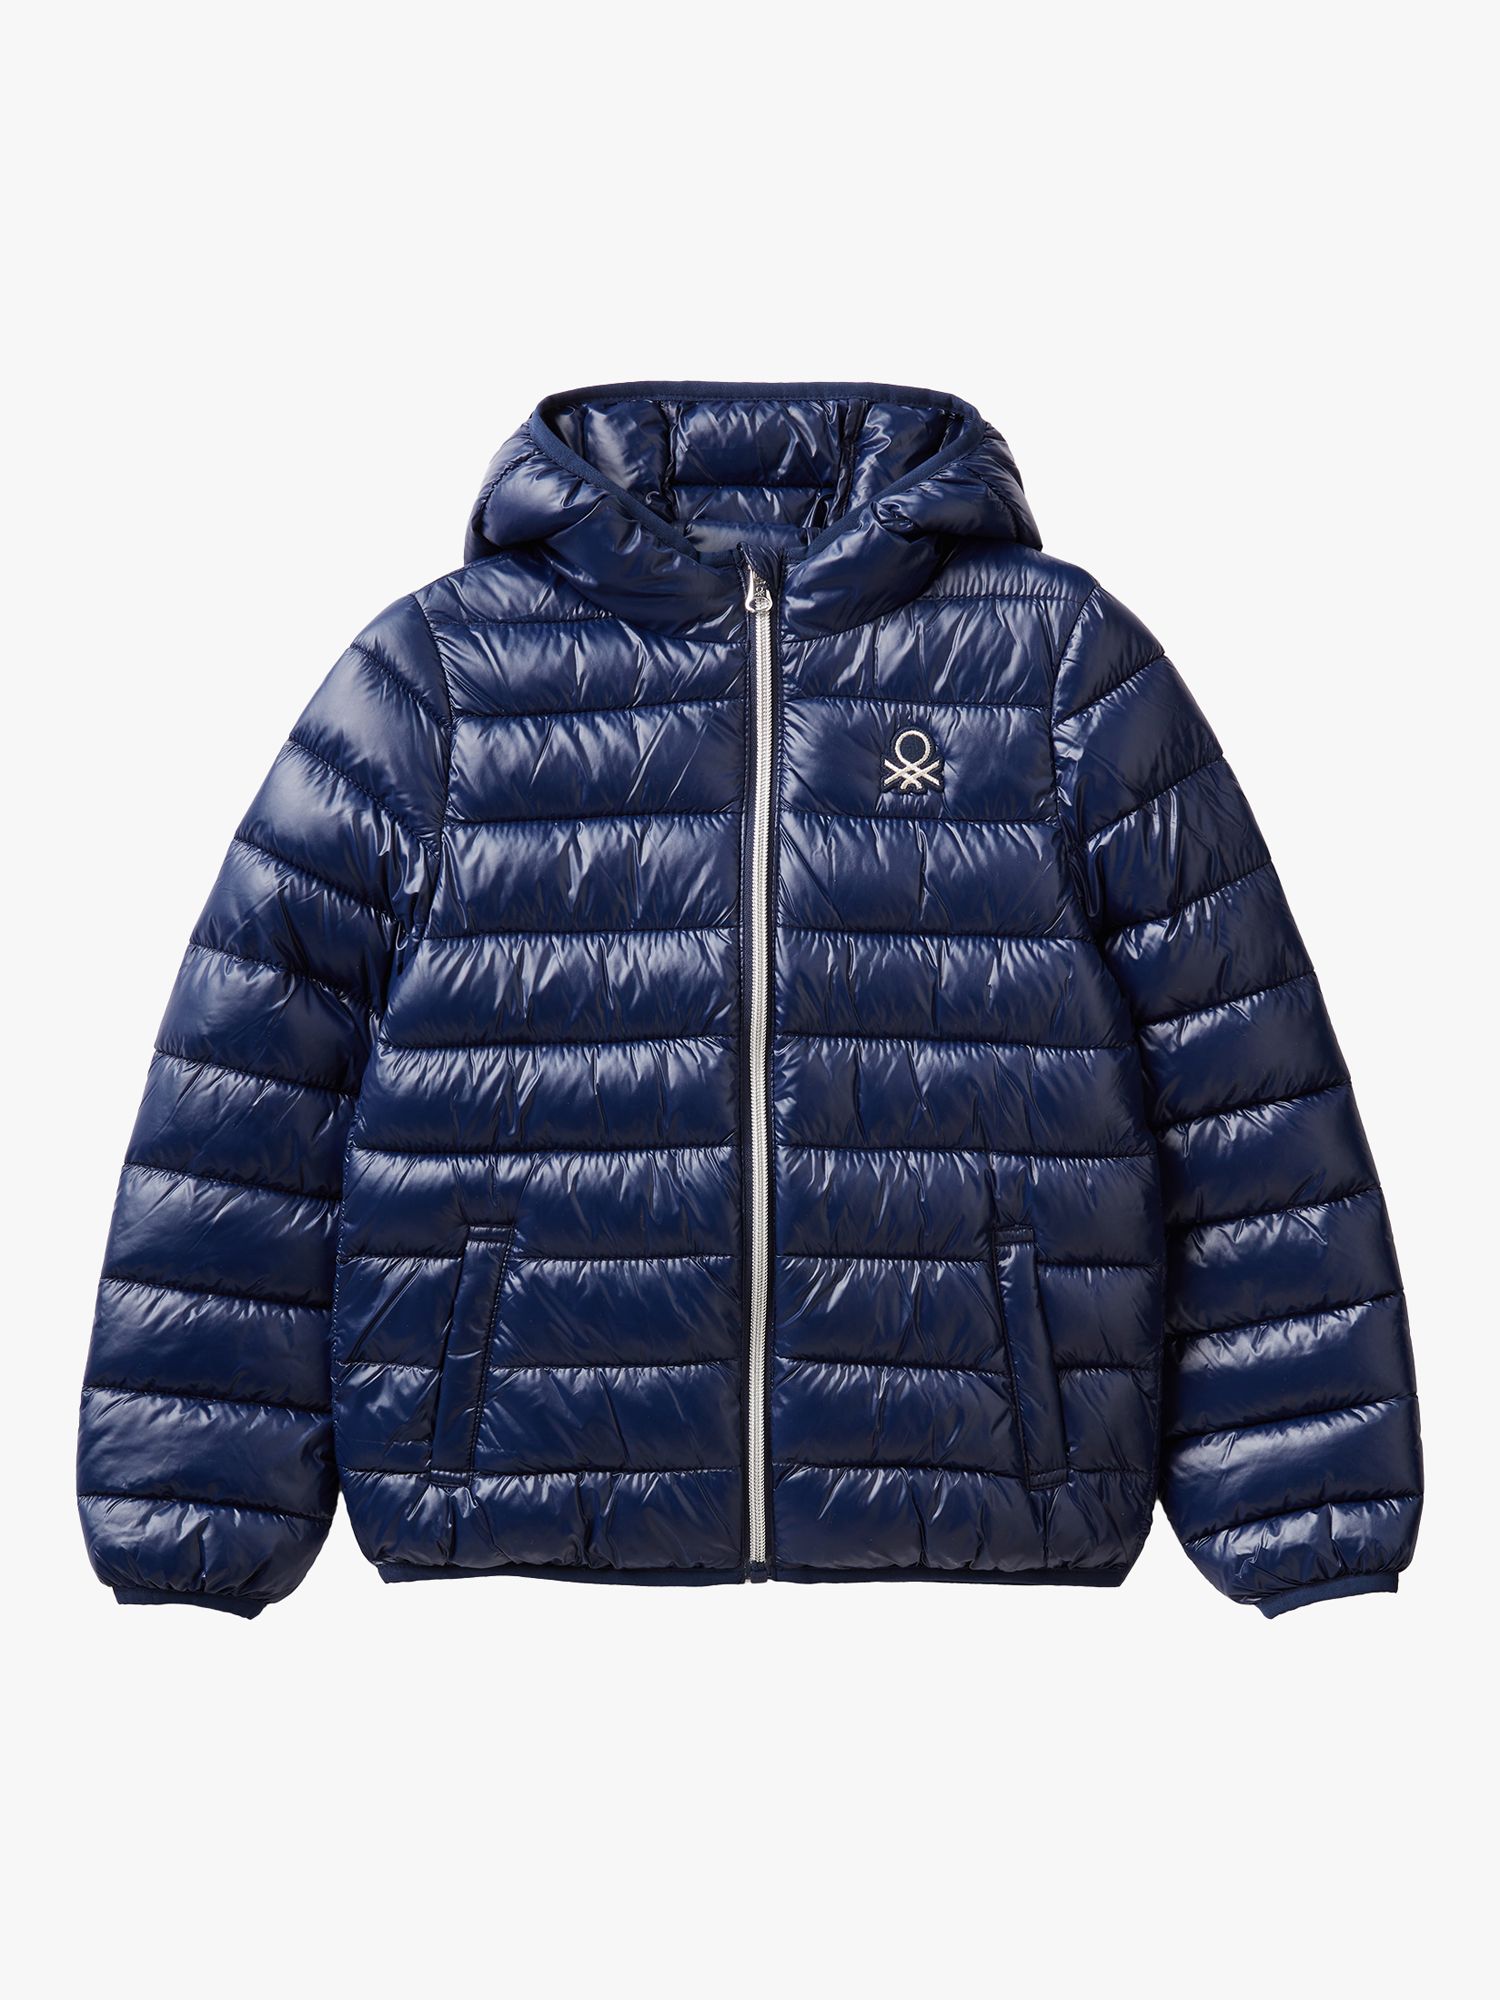 Benetton Kids' Hooded Puffer Jacket, Night Blue, 7-8 years